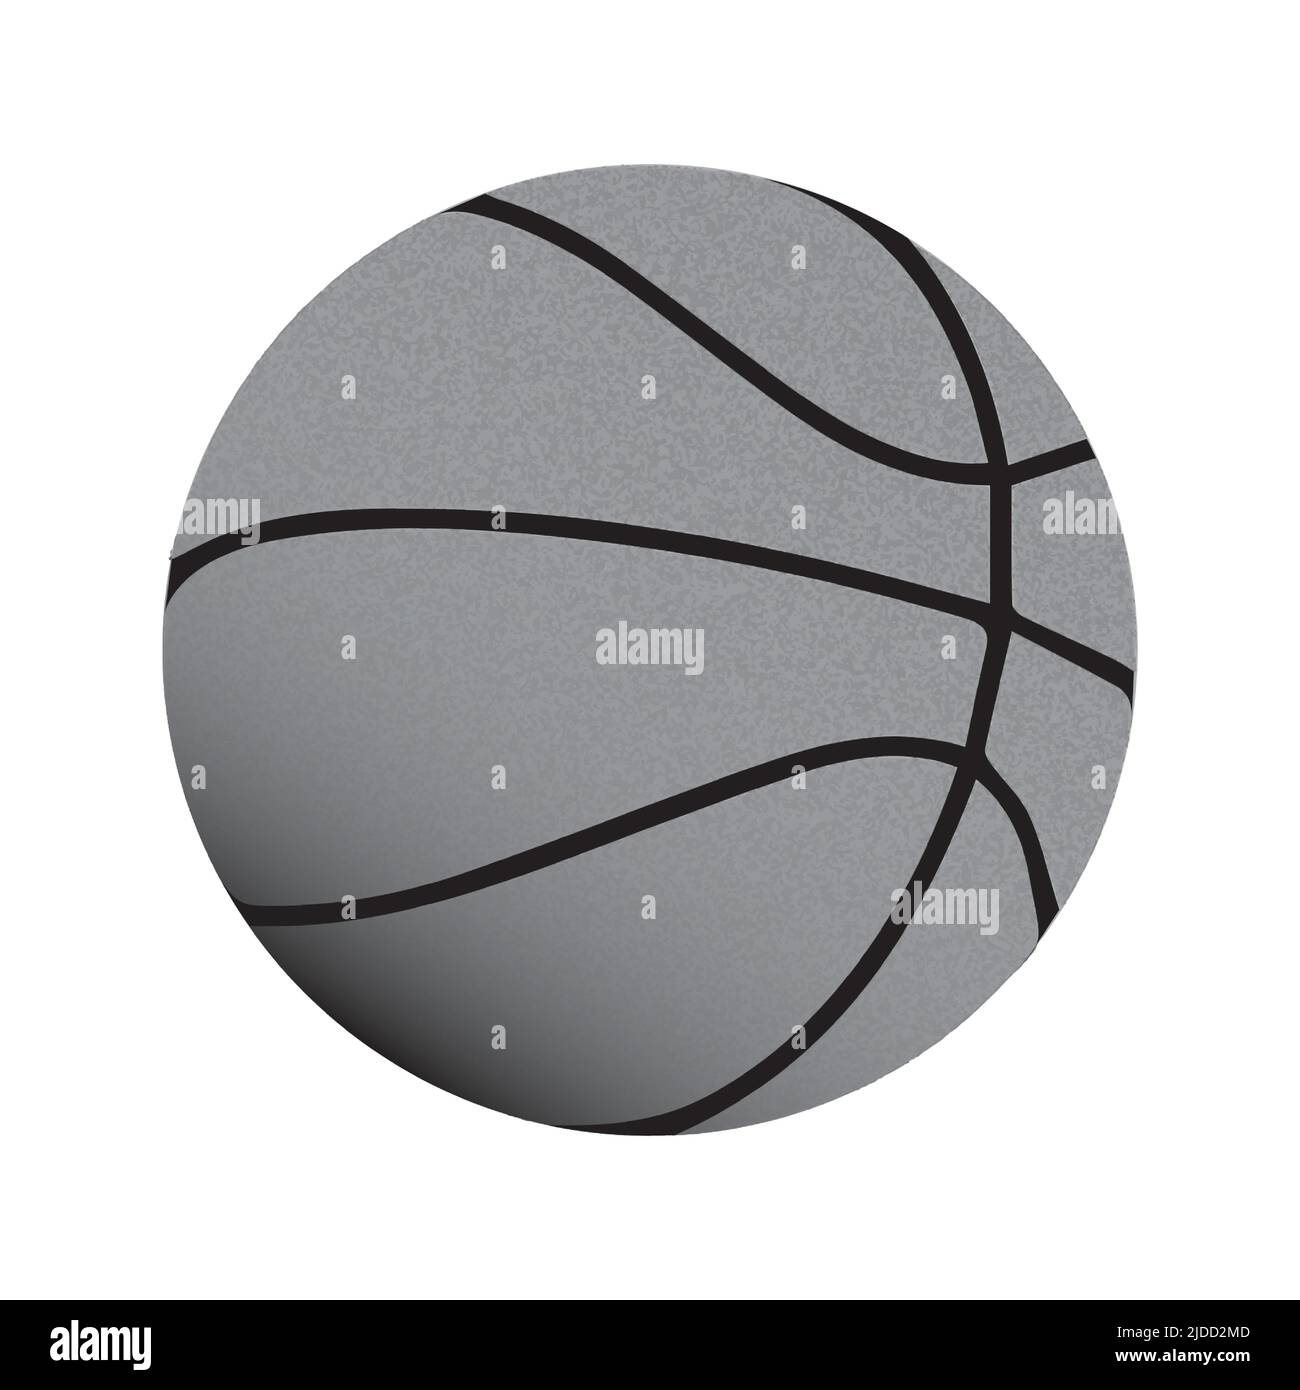 Vektor-Illustration von grau colered realistische Basketball Cliparts Zeichnung. Vektorgrafik Stock Vektor